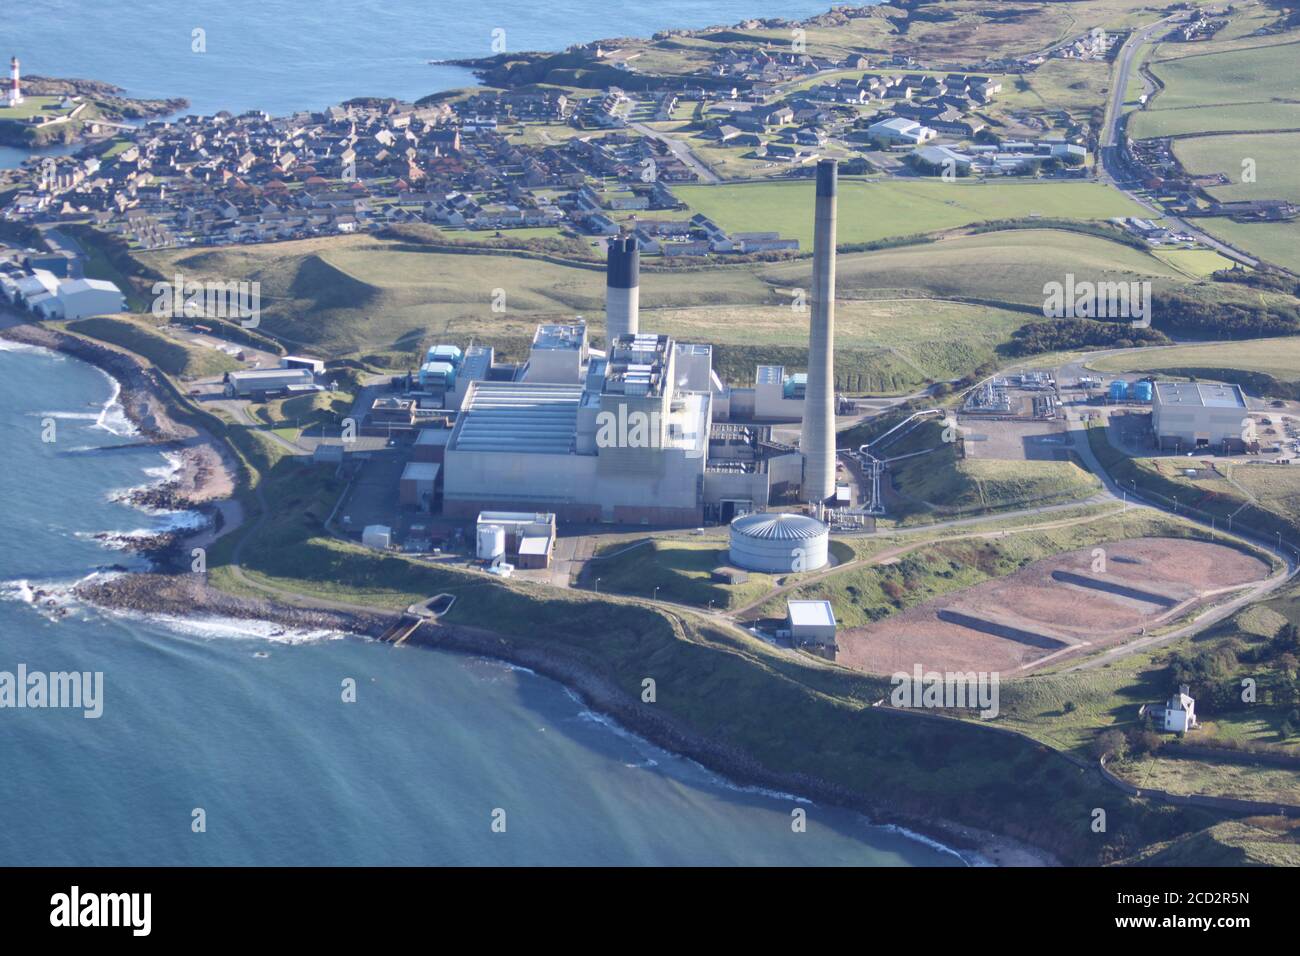 Peterhead Power Station Stockfoto